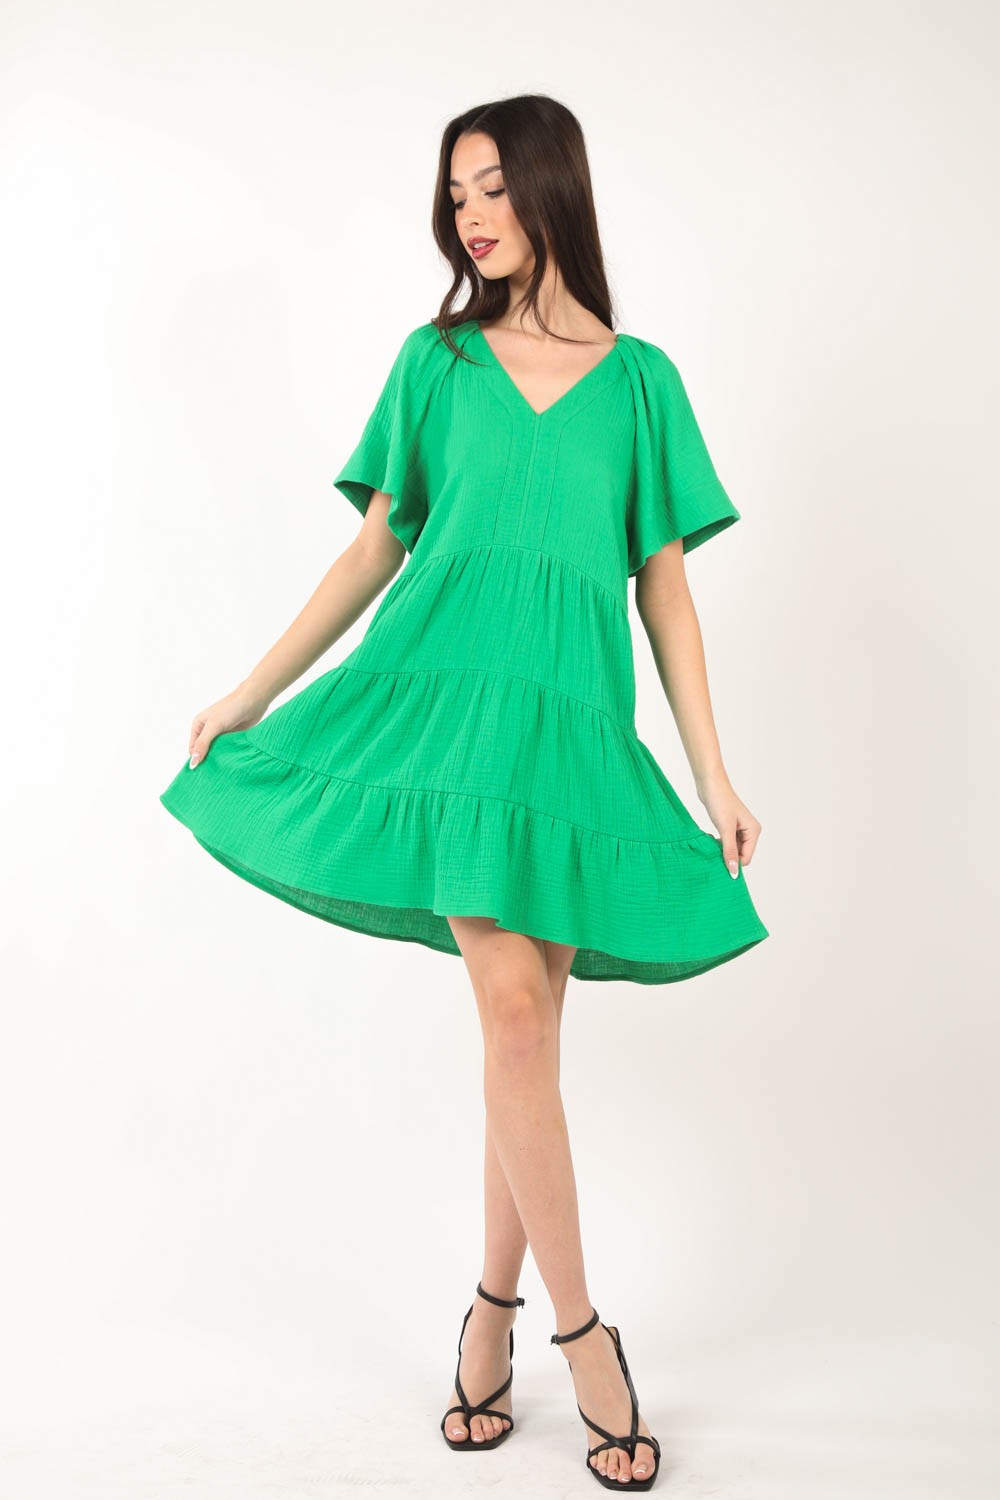 VERY J Green Texture V-Neck Ruffled Tiered Dress